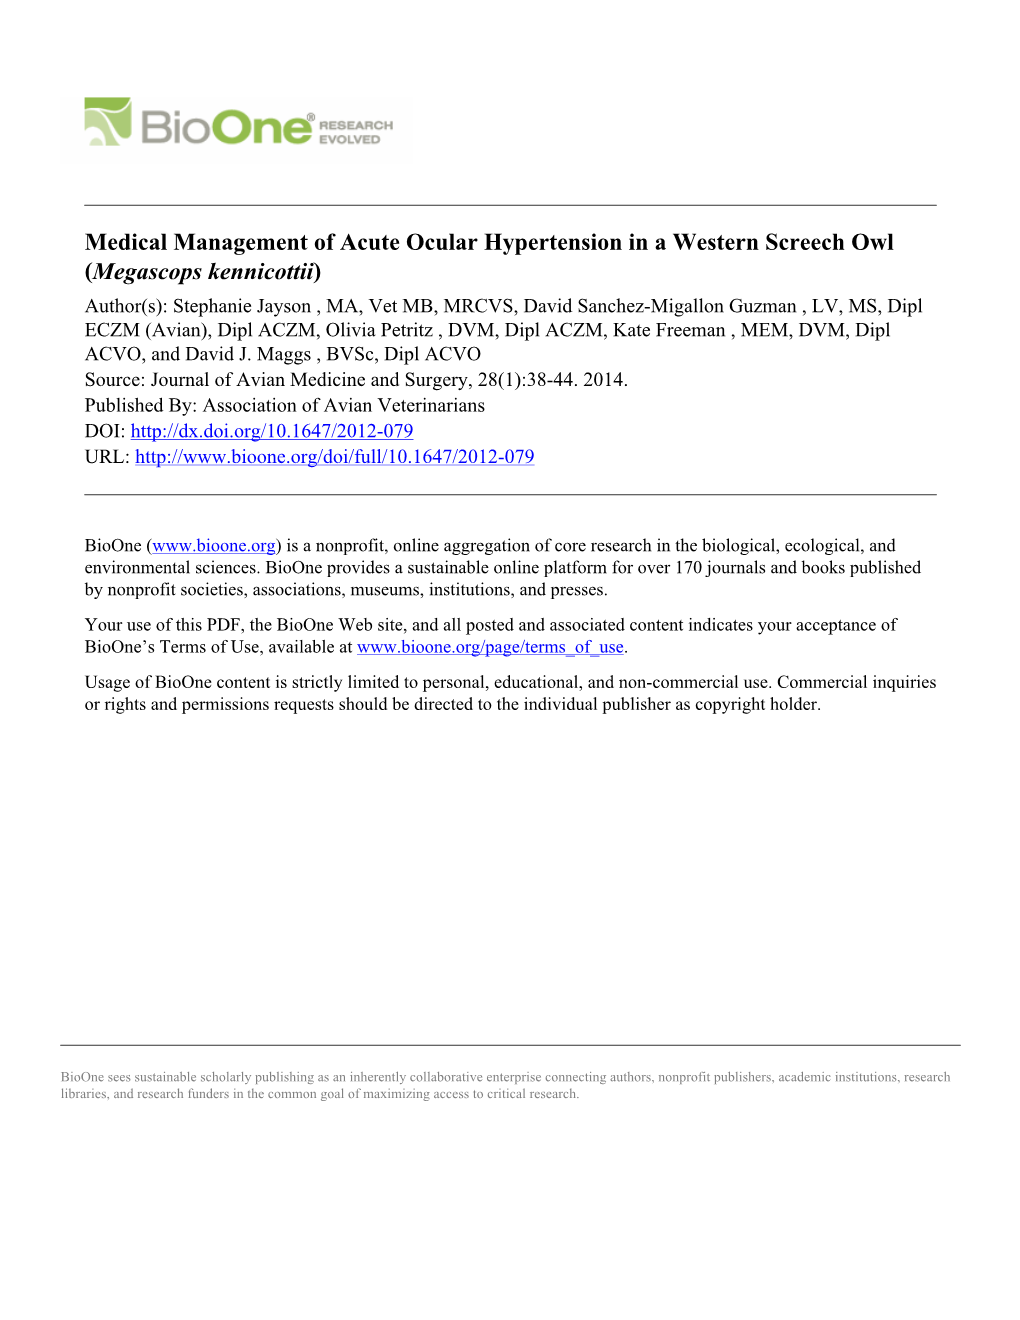 Medical Management of Acute Ocular Hypertension in a Western Screech Owl (Megascops Kennicottii)